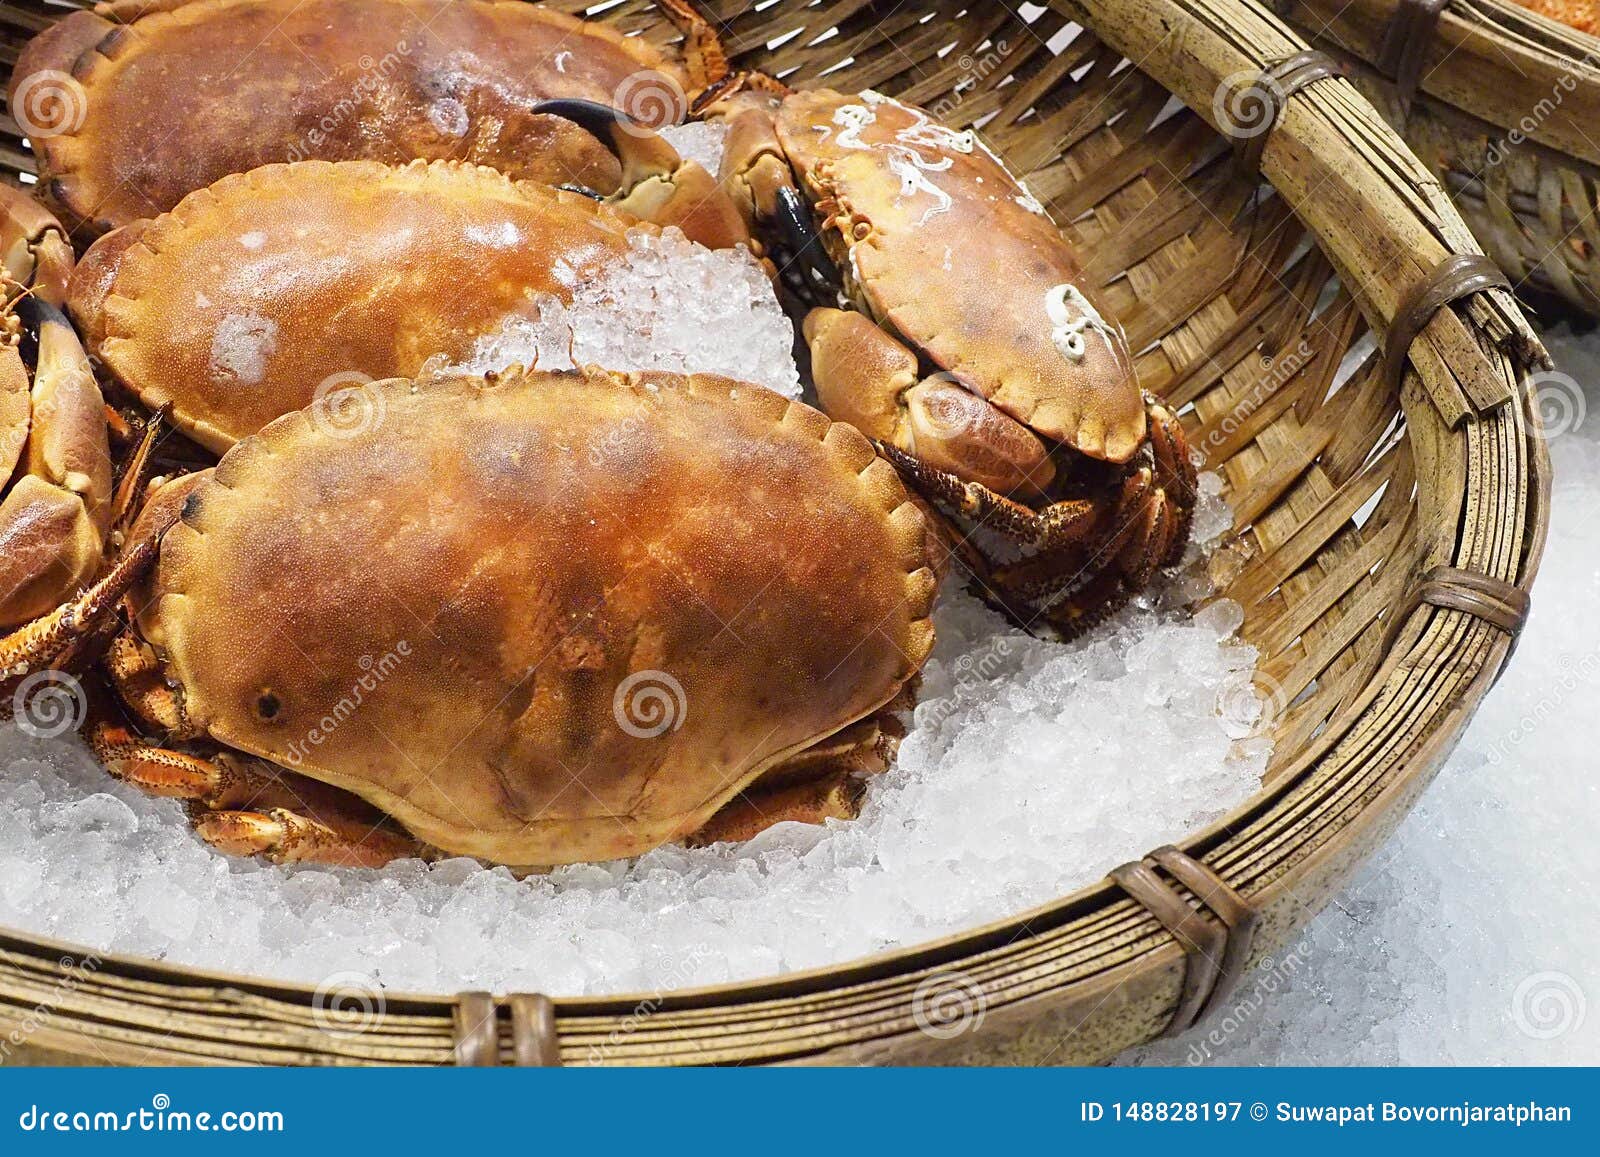 Giant Alaskan King Crab at Fish Market Stock Image - Image of